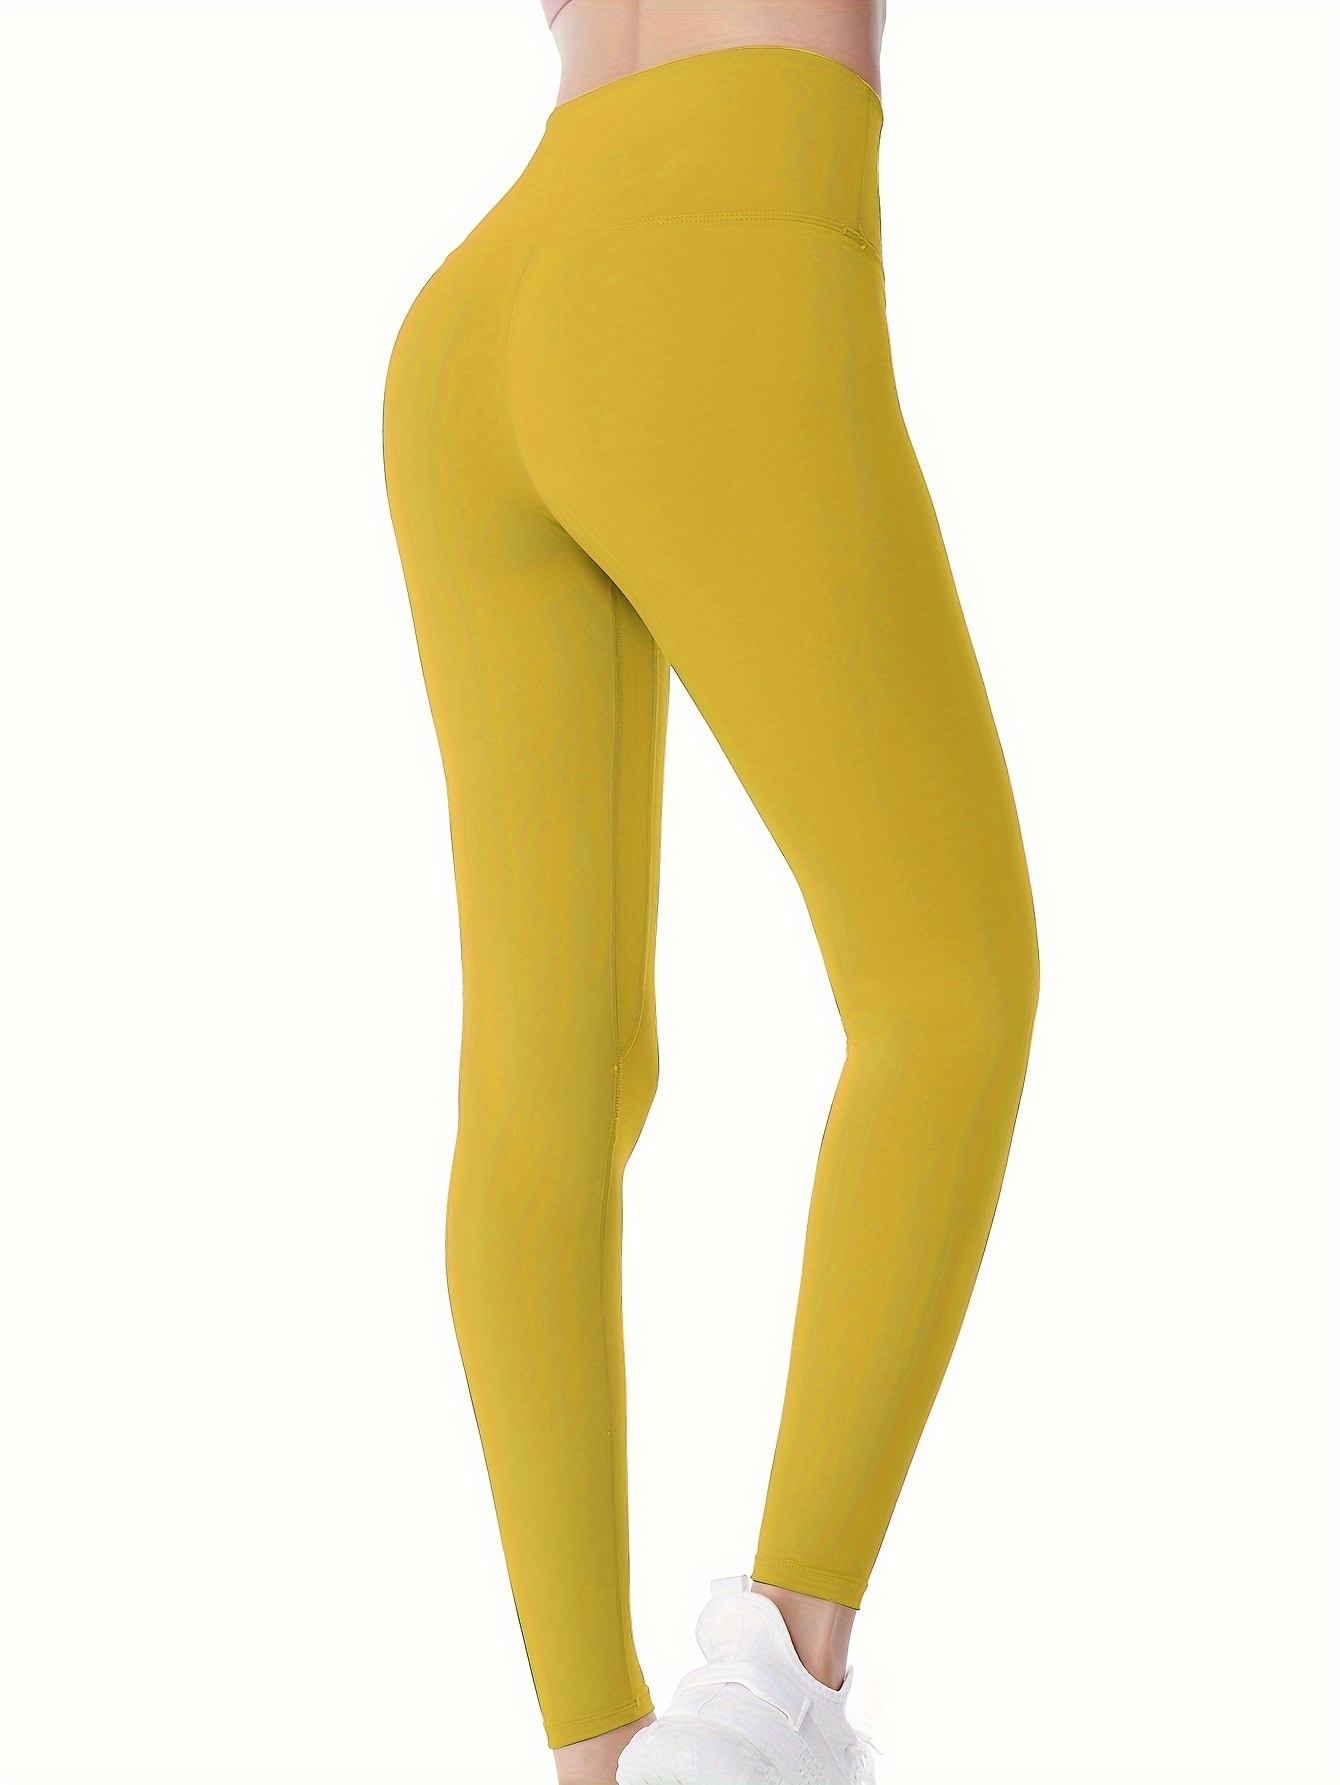 72 Pieces Mopas Ladies Nylon Leggings Yellow - Womens Leggings - at 